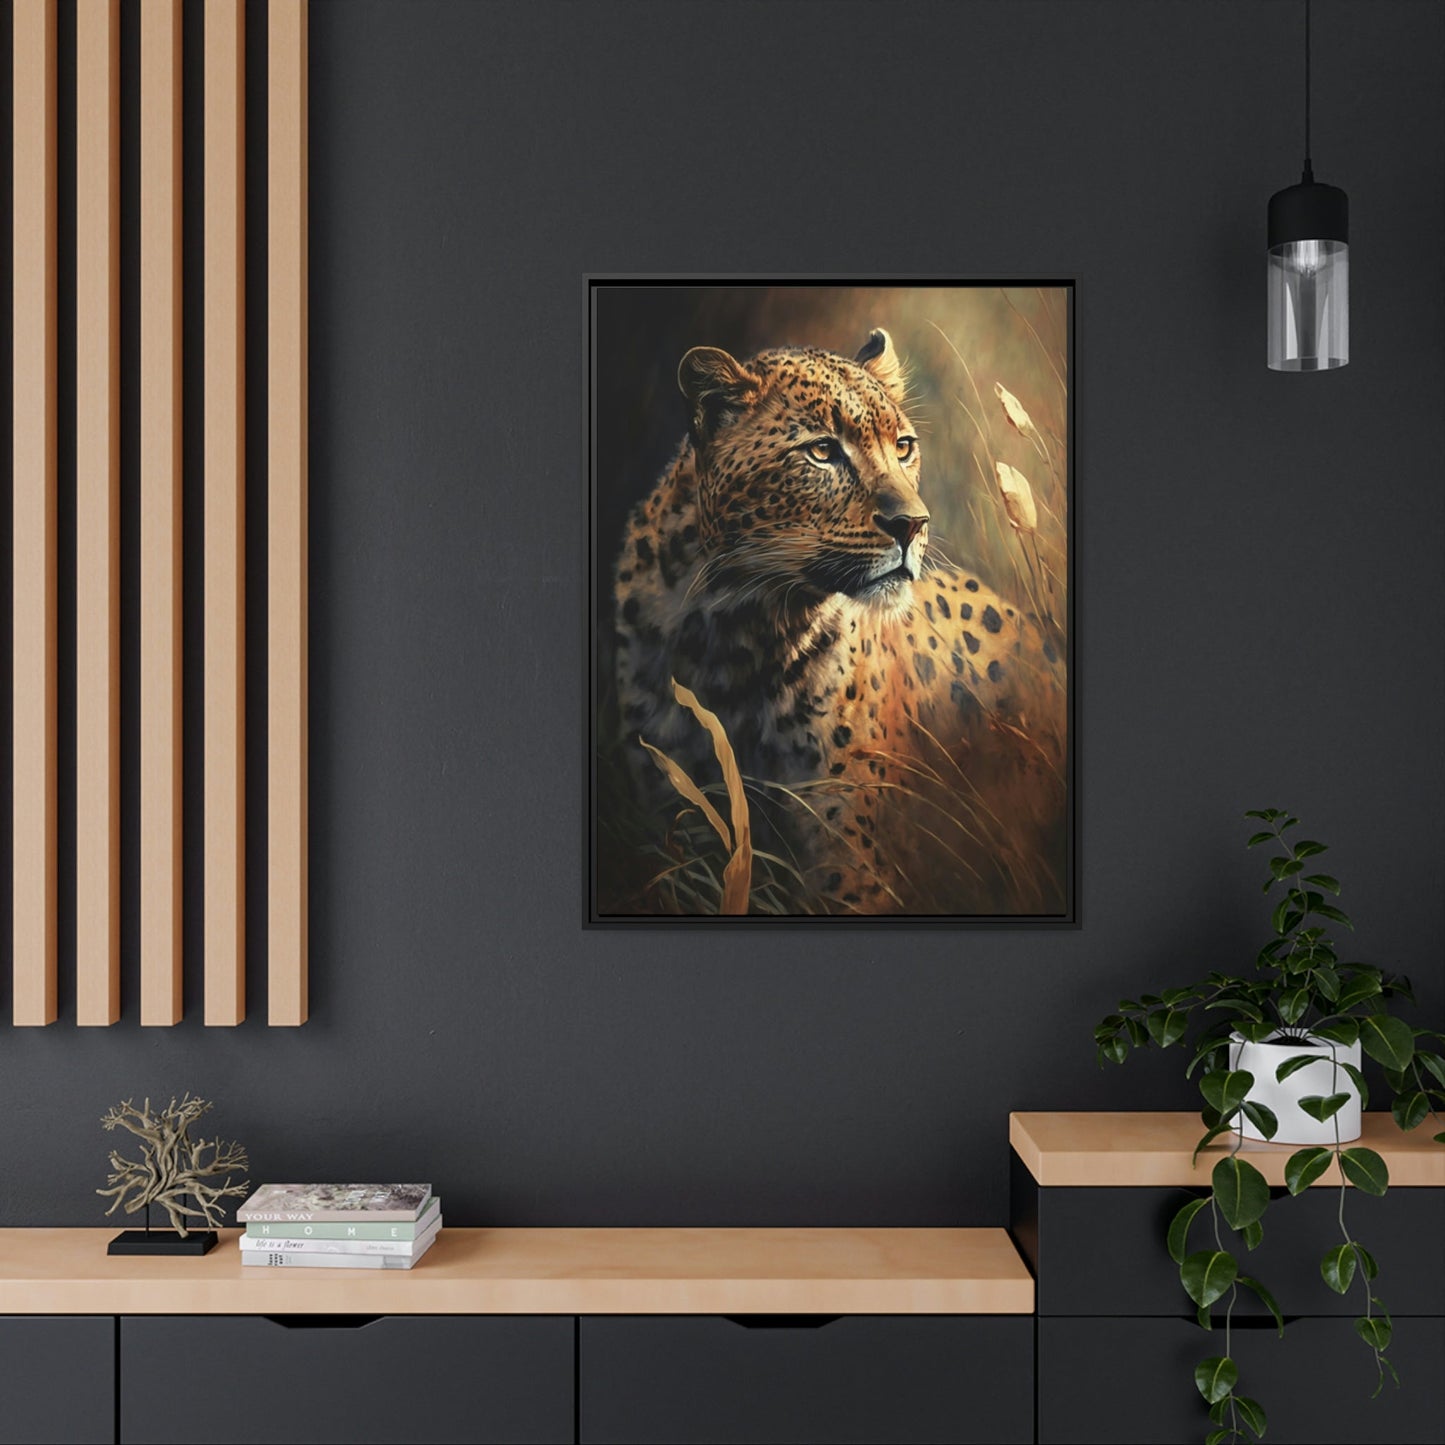 Fierce and Fast: Cheetahs on Dynamic Framed Canvas